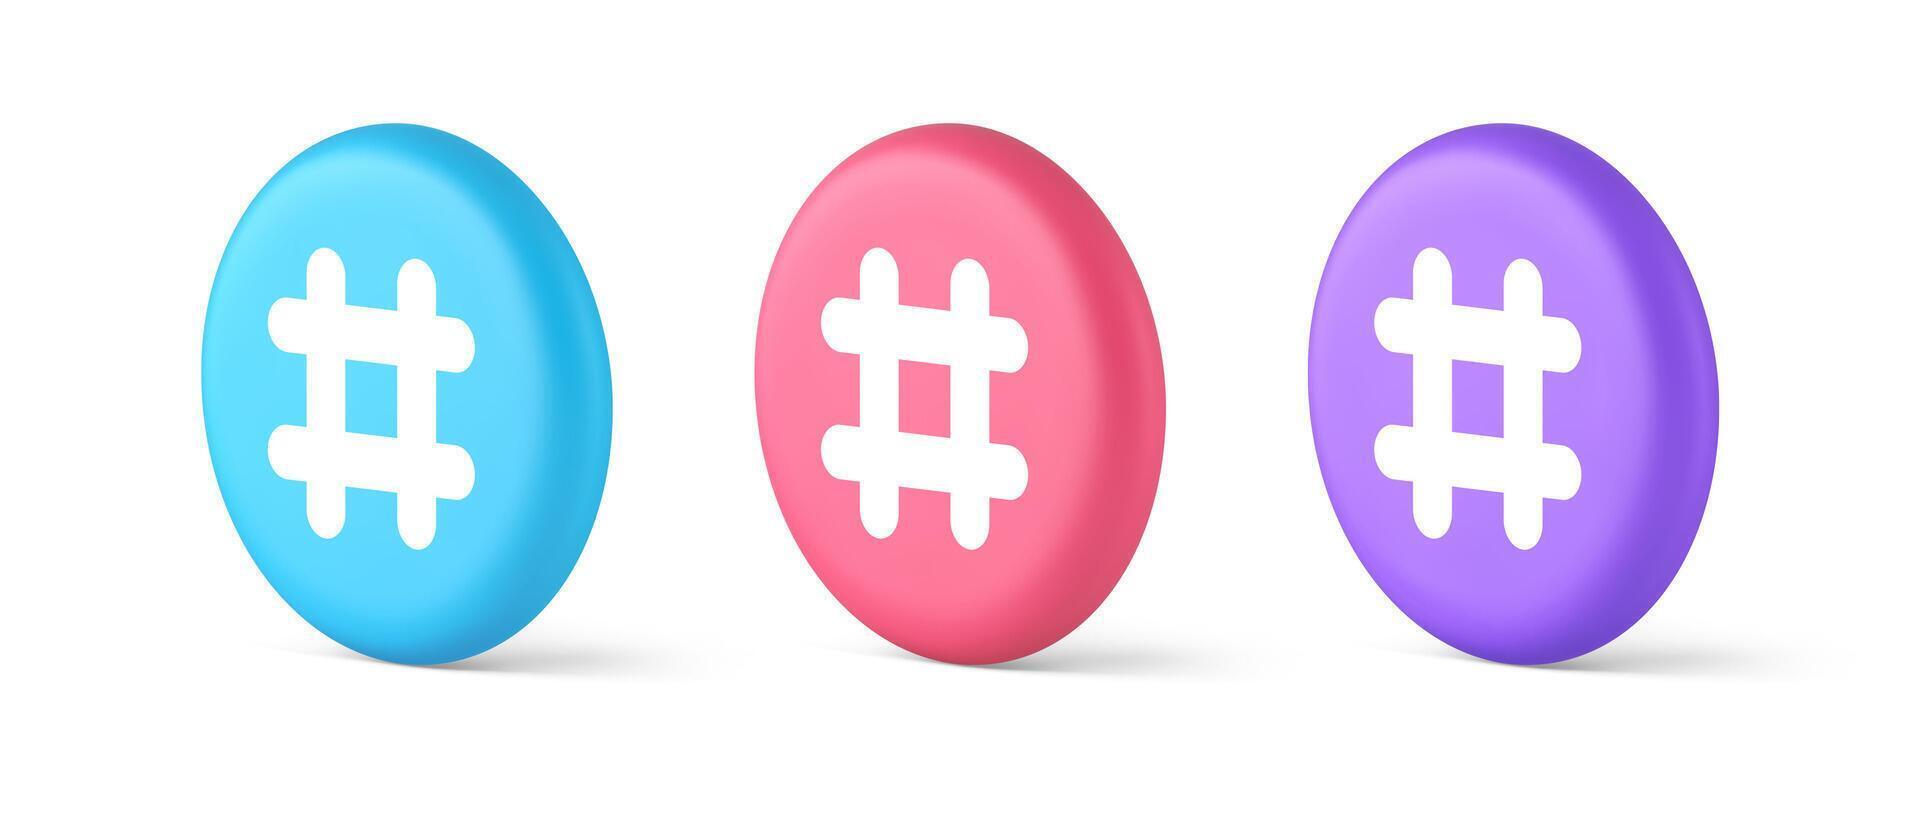 hashtag botón social red medios de comunicación comunicación símbolo Internet mensaje llave 3d isométrica circulo icono vector